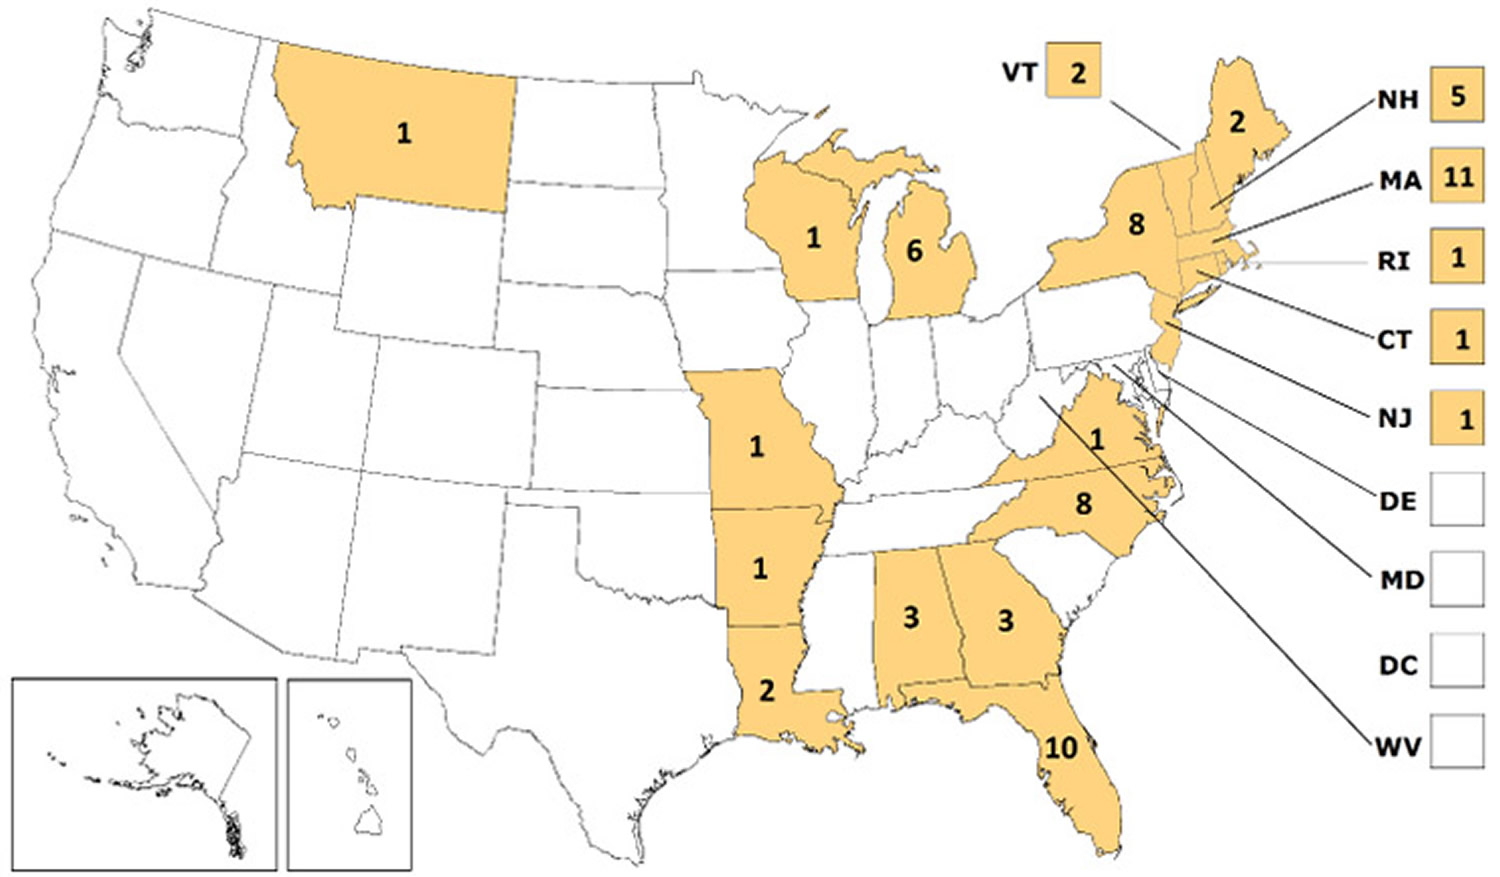 eastern equine encephalitis cases in United States